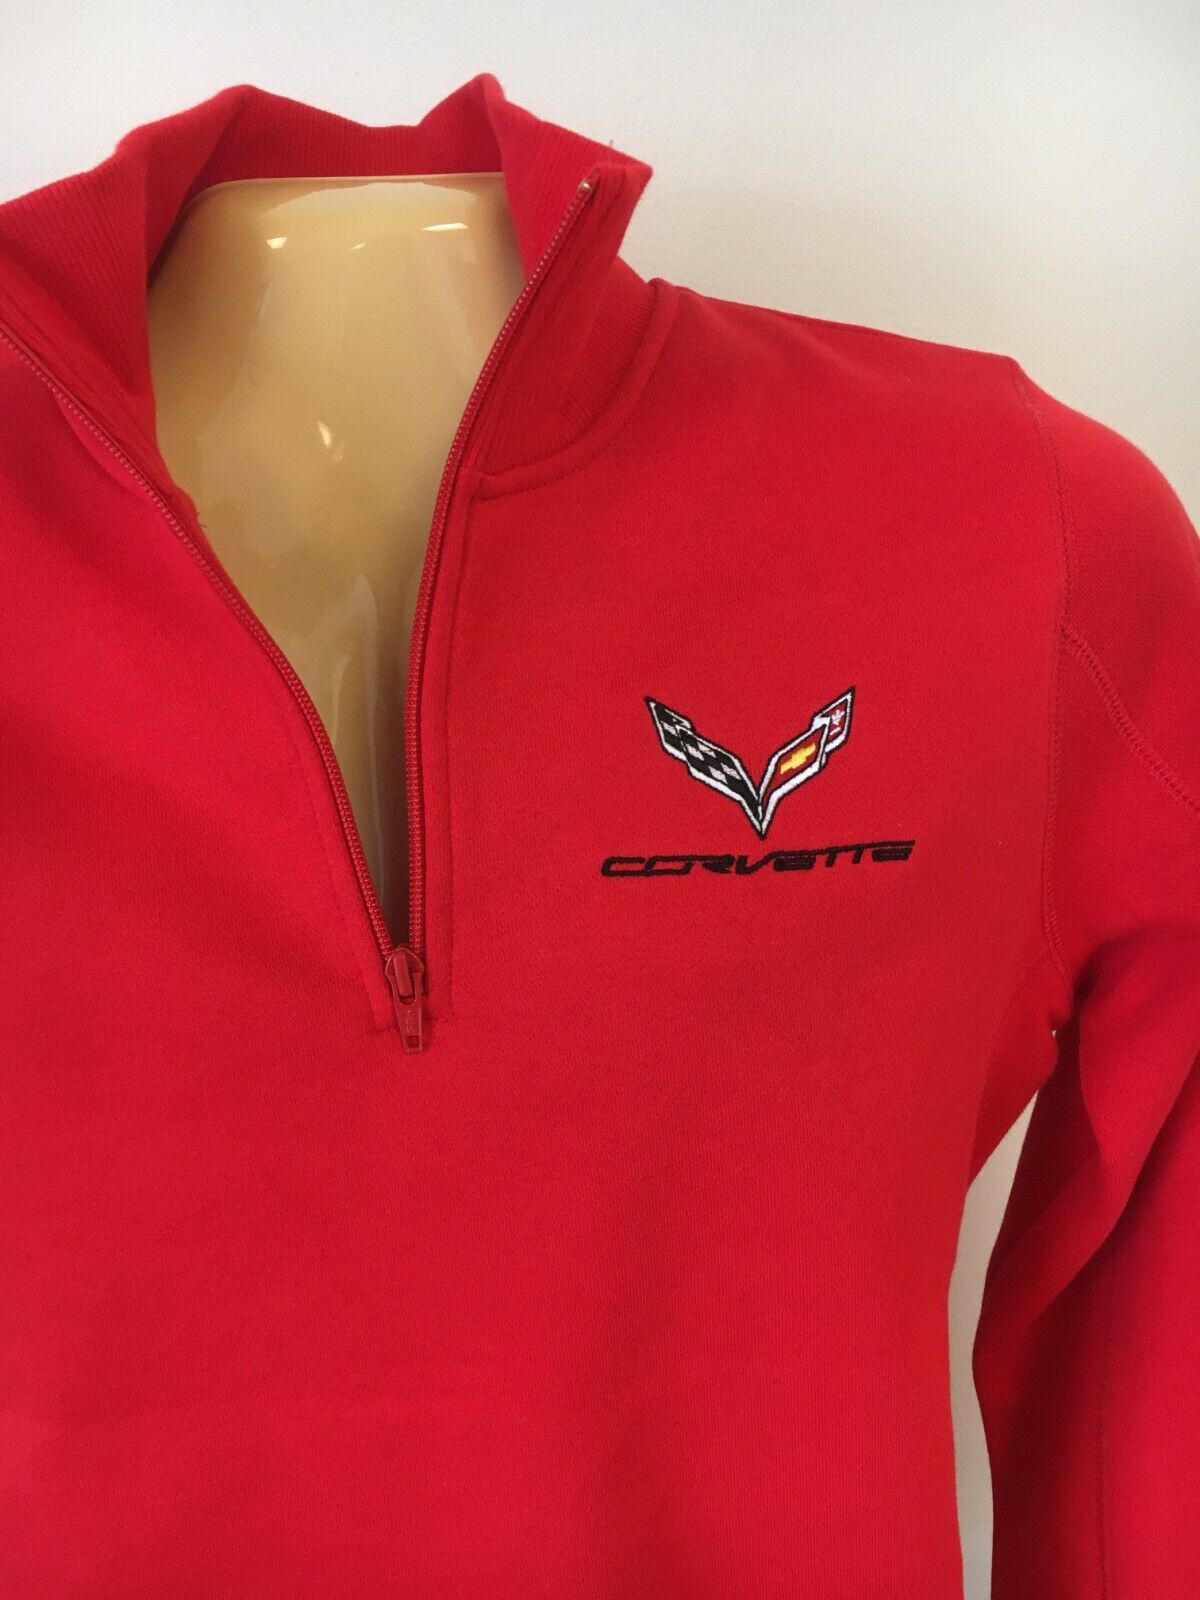 Womens C7 Corvette Quarter Zip Pullover Sweatshirt Gray and Red